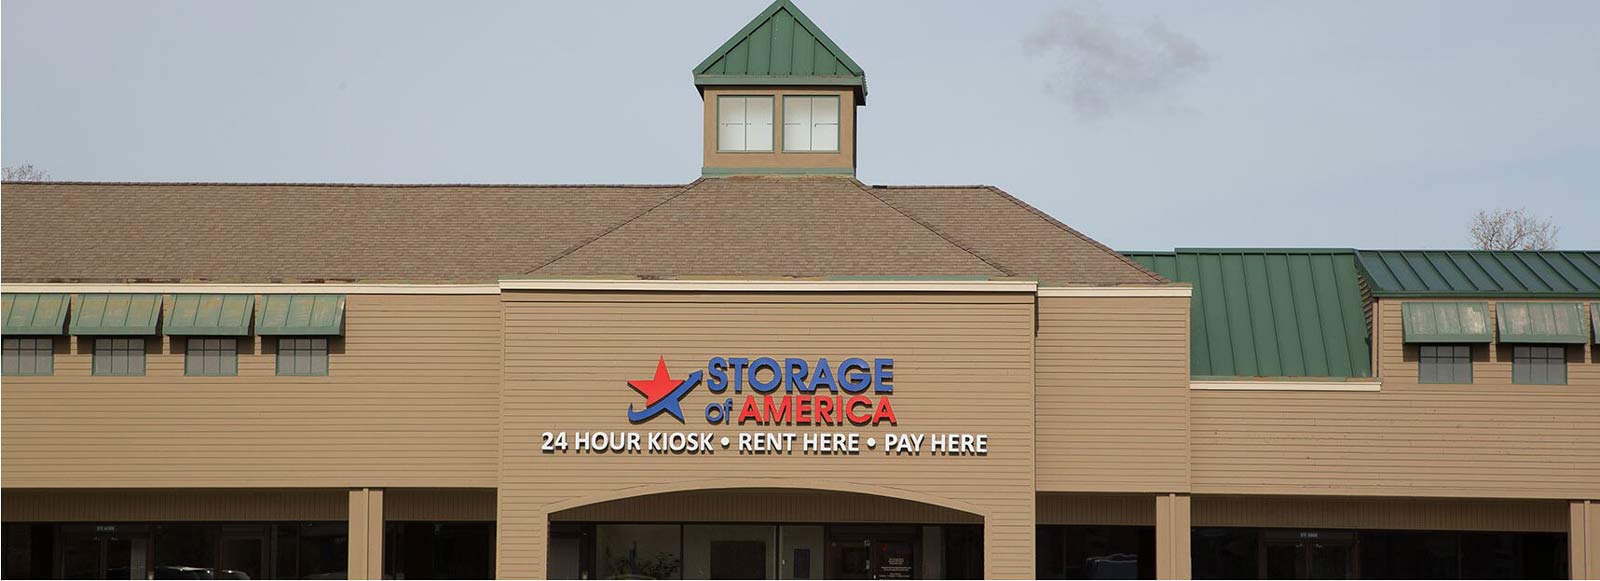 Storage of America 24 Hour Kiosk Location